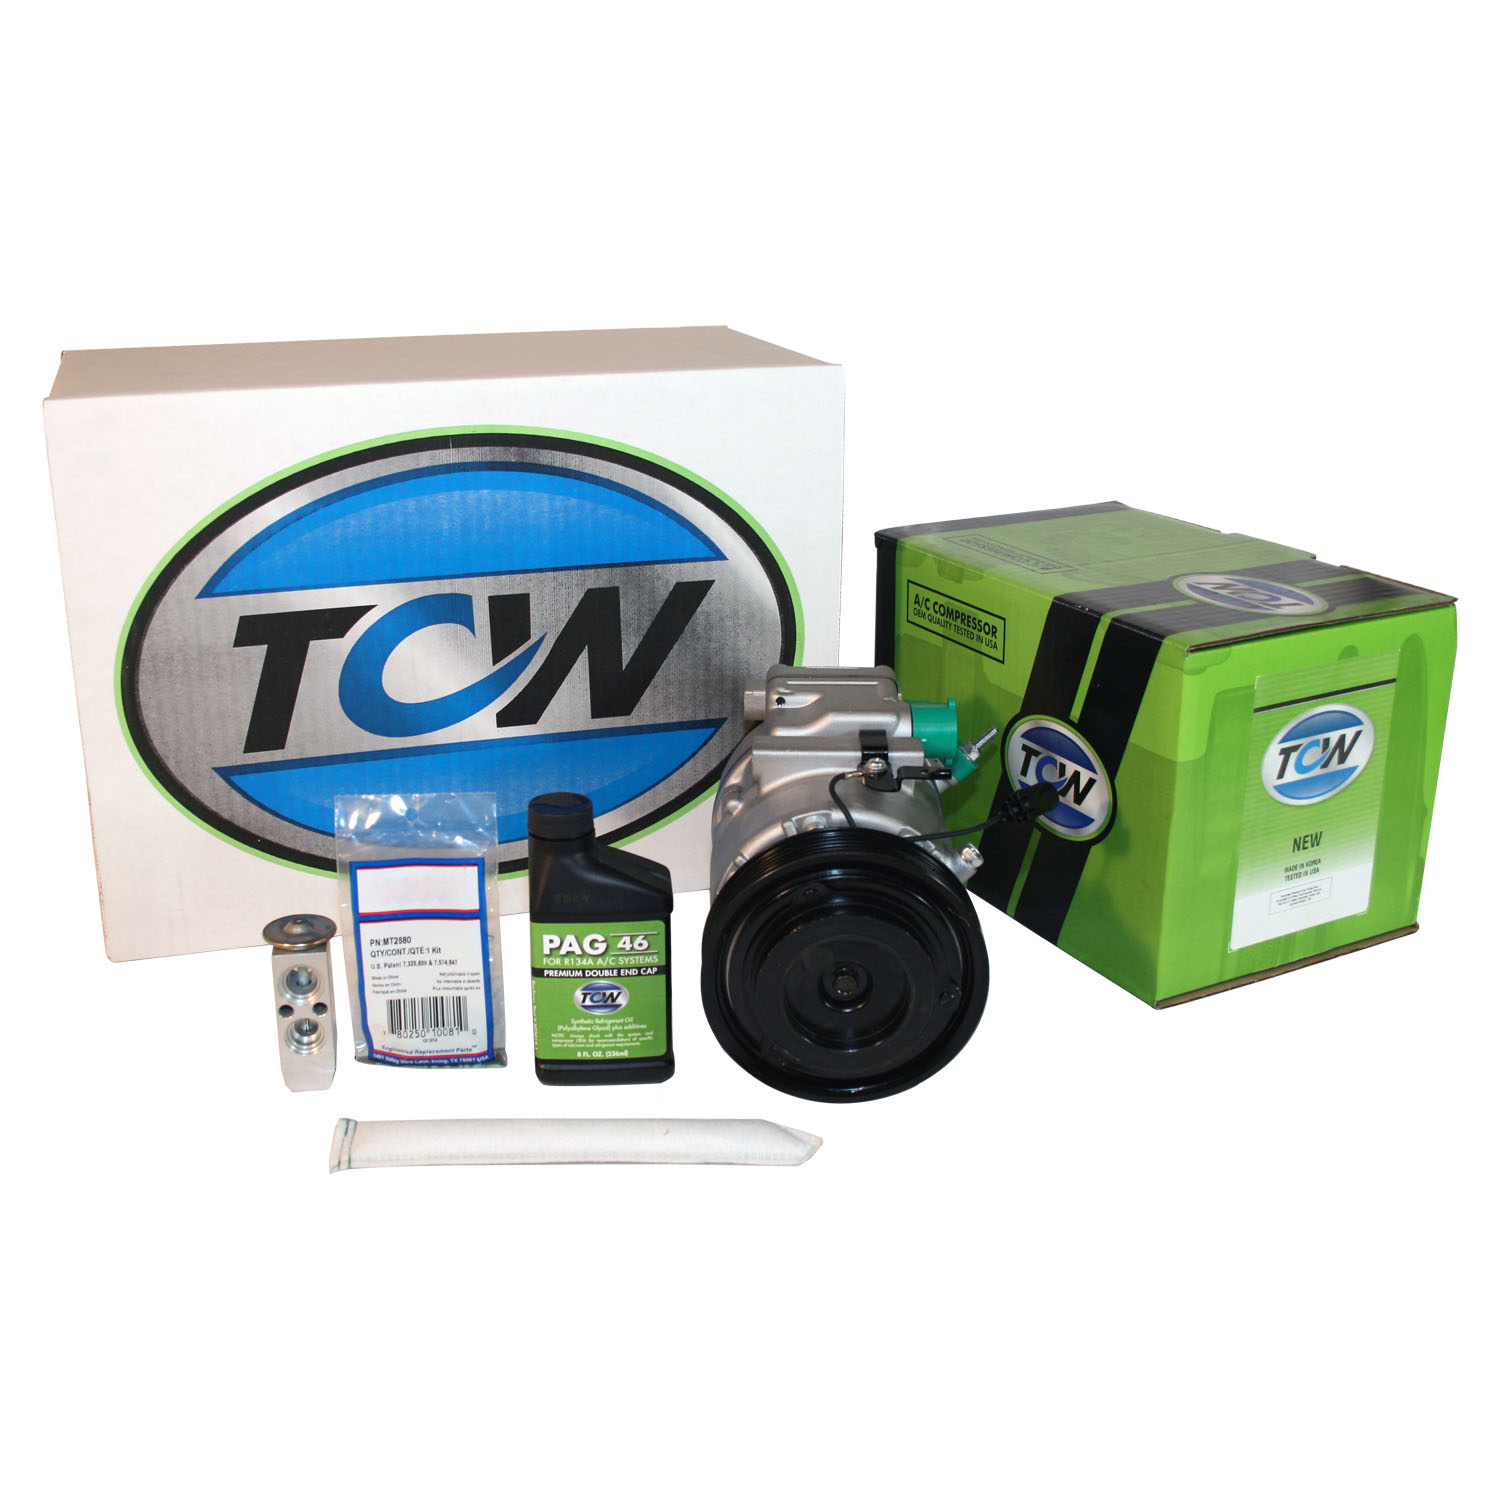 TCW Vehicle A/C Kit K1000378N New Product Image field_60b6a13a6e67c